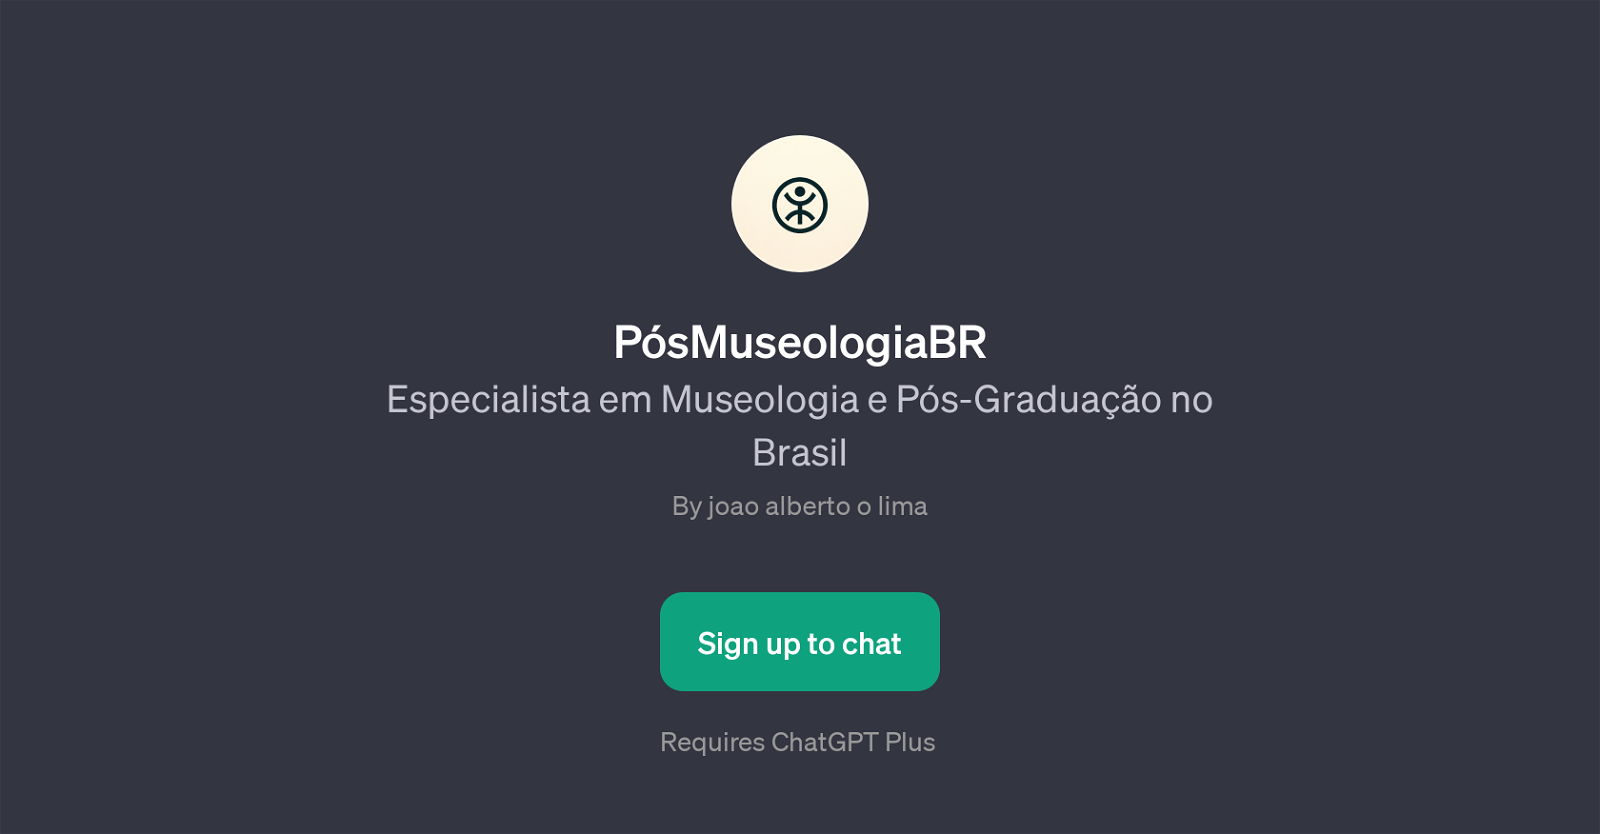 PsMuseologiaBR website